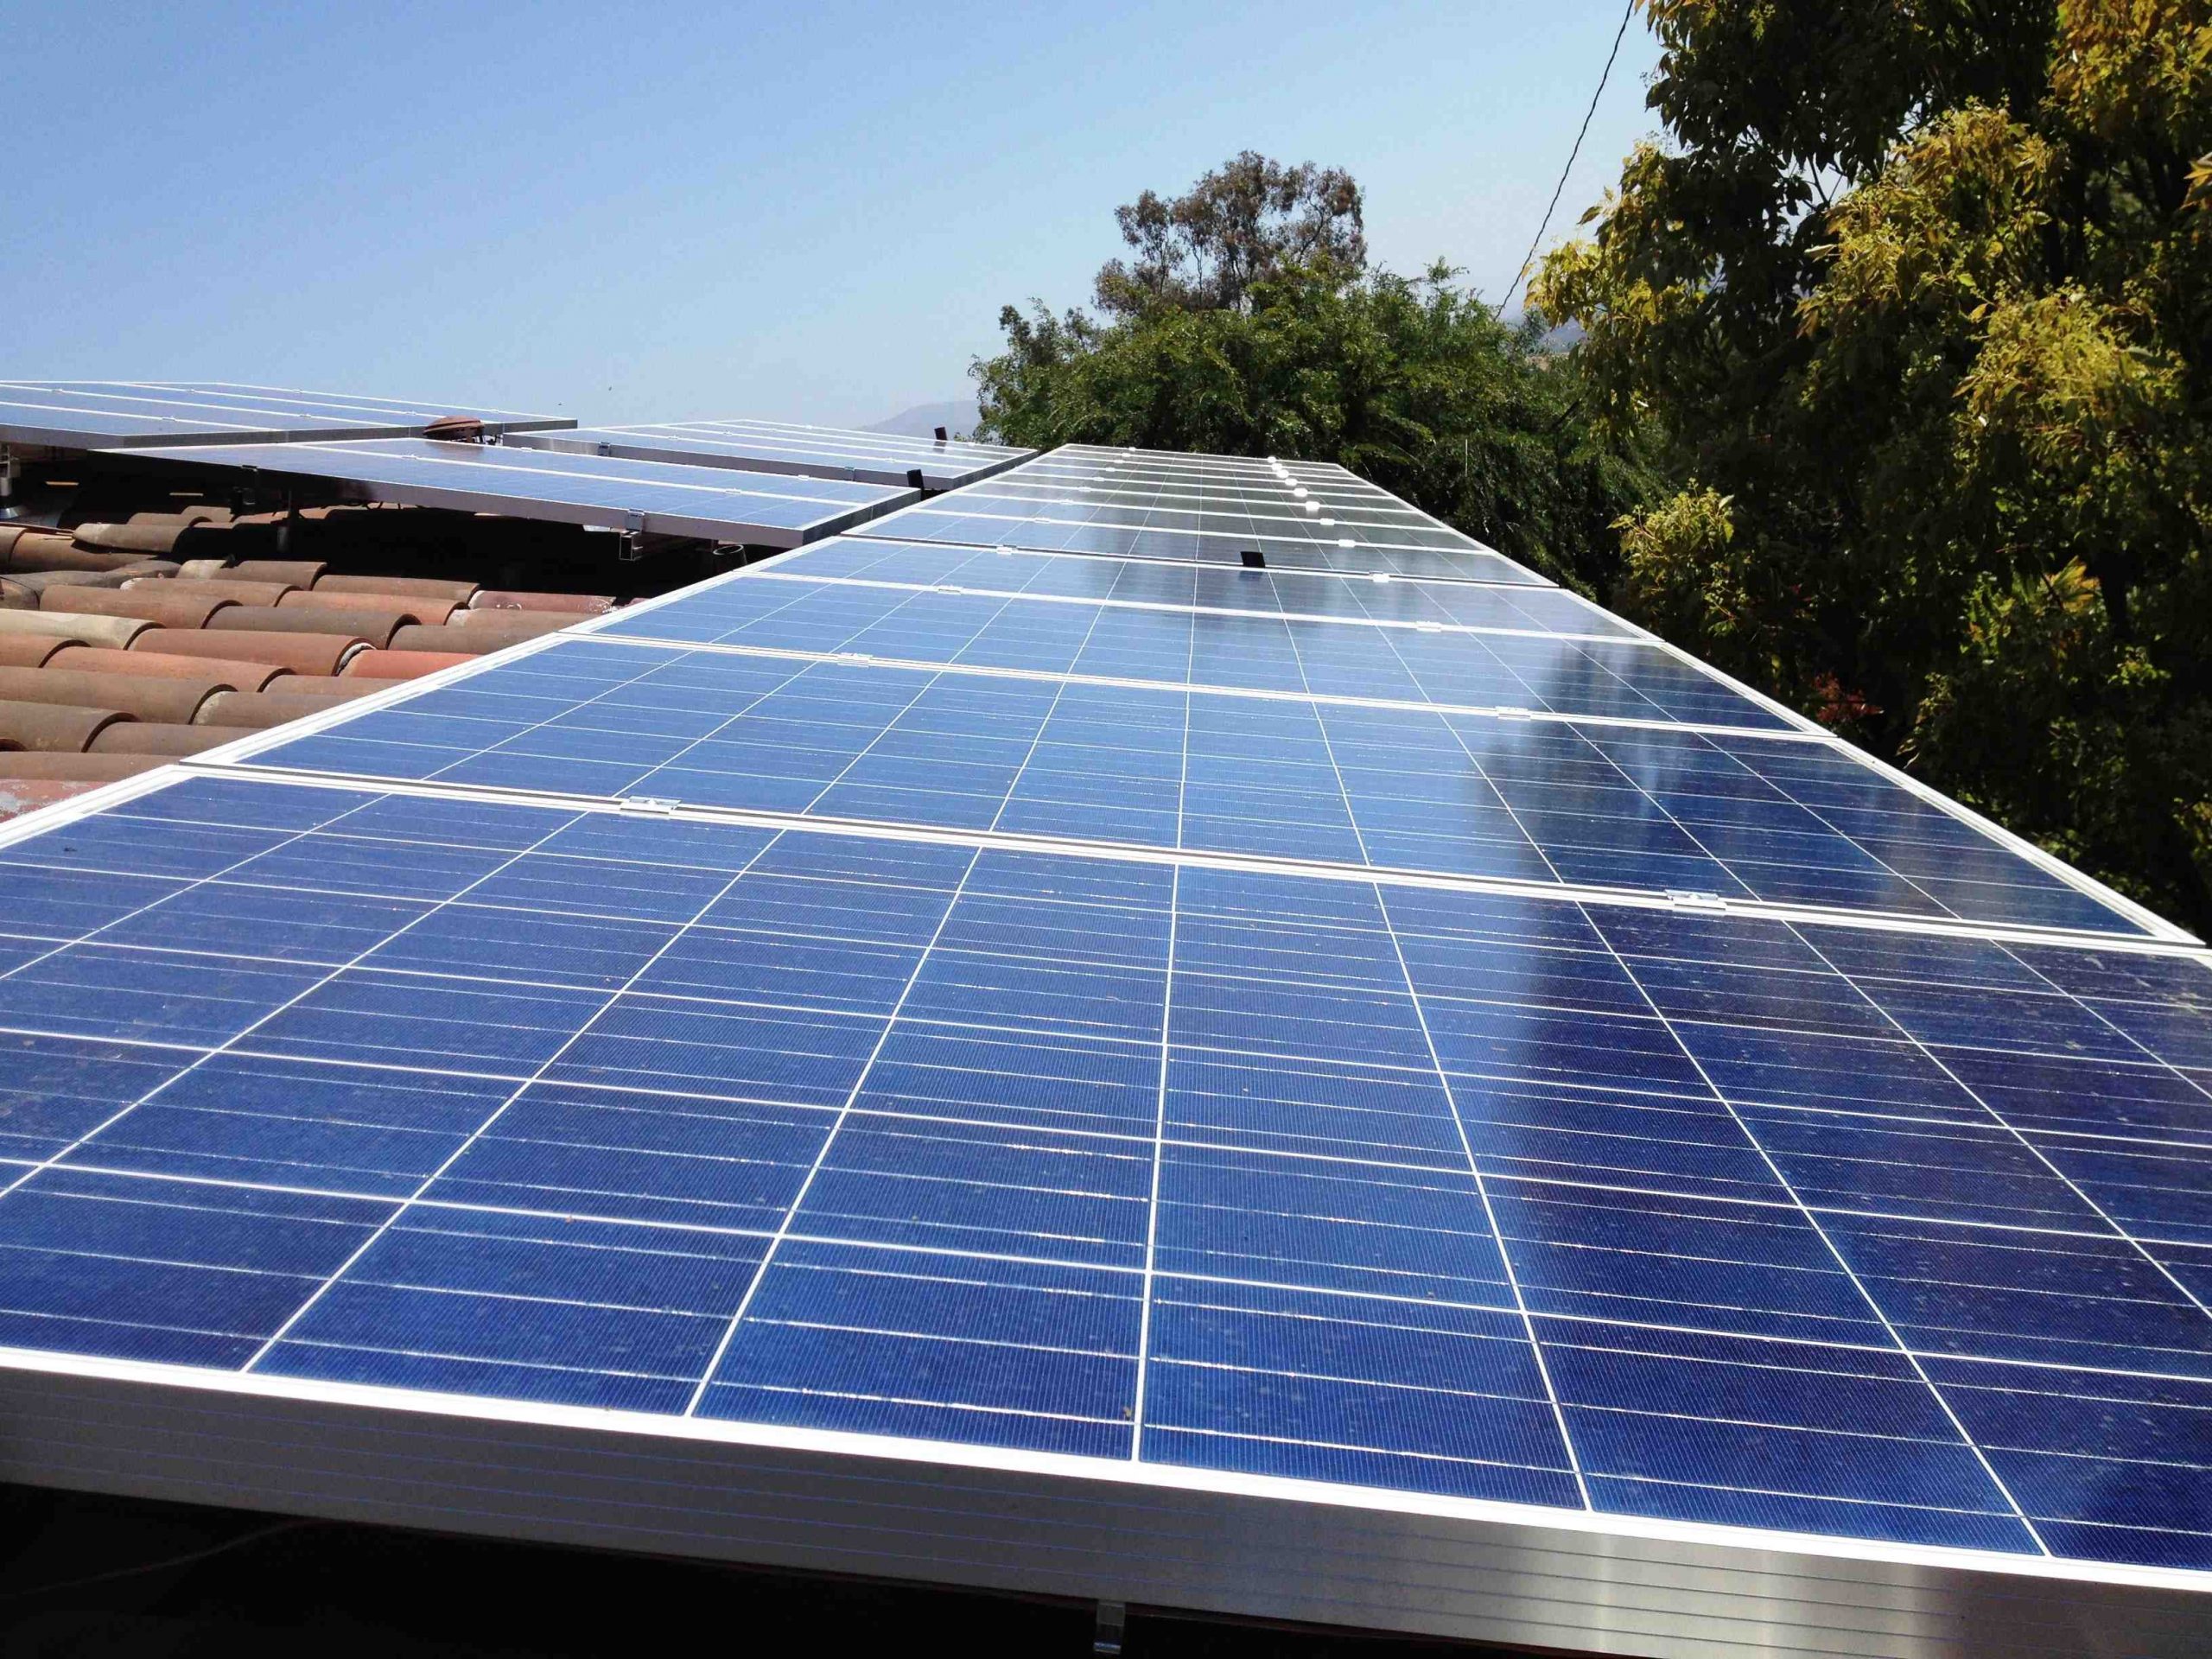 Are solar panels a ripoff?